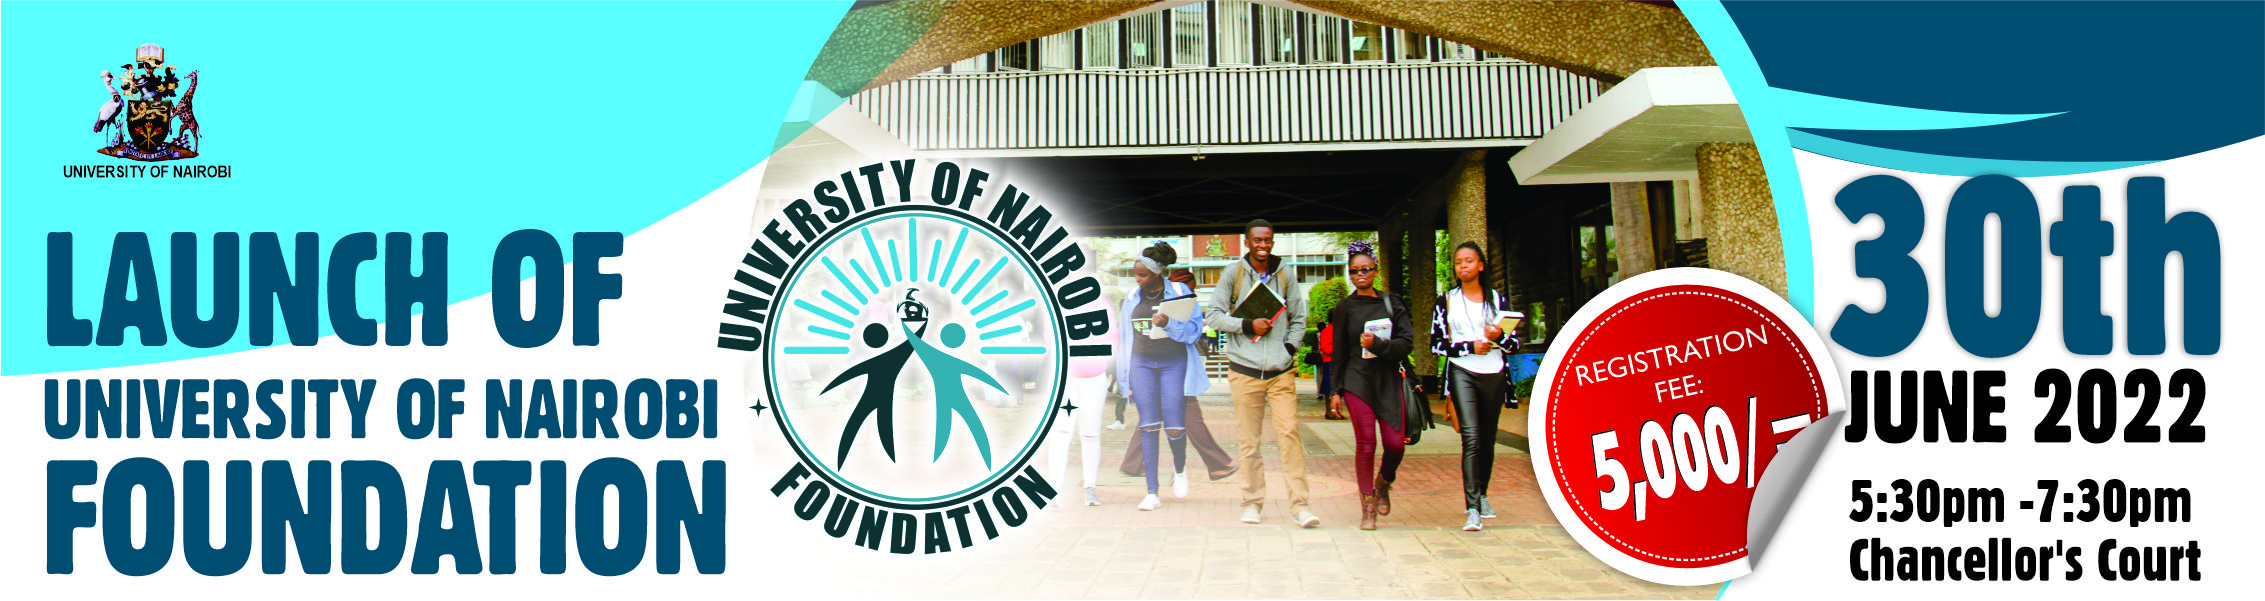 Launch of the University of Nairobi Foundation